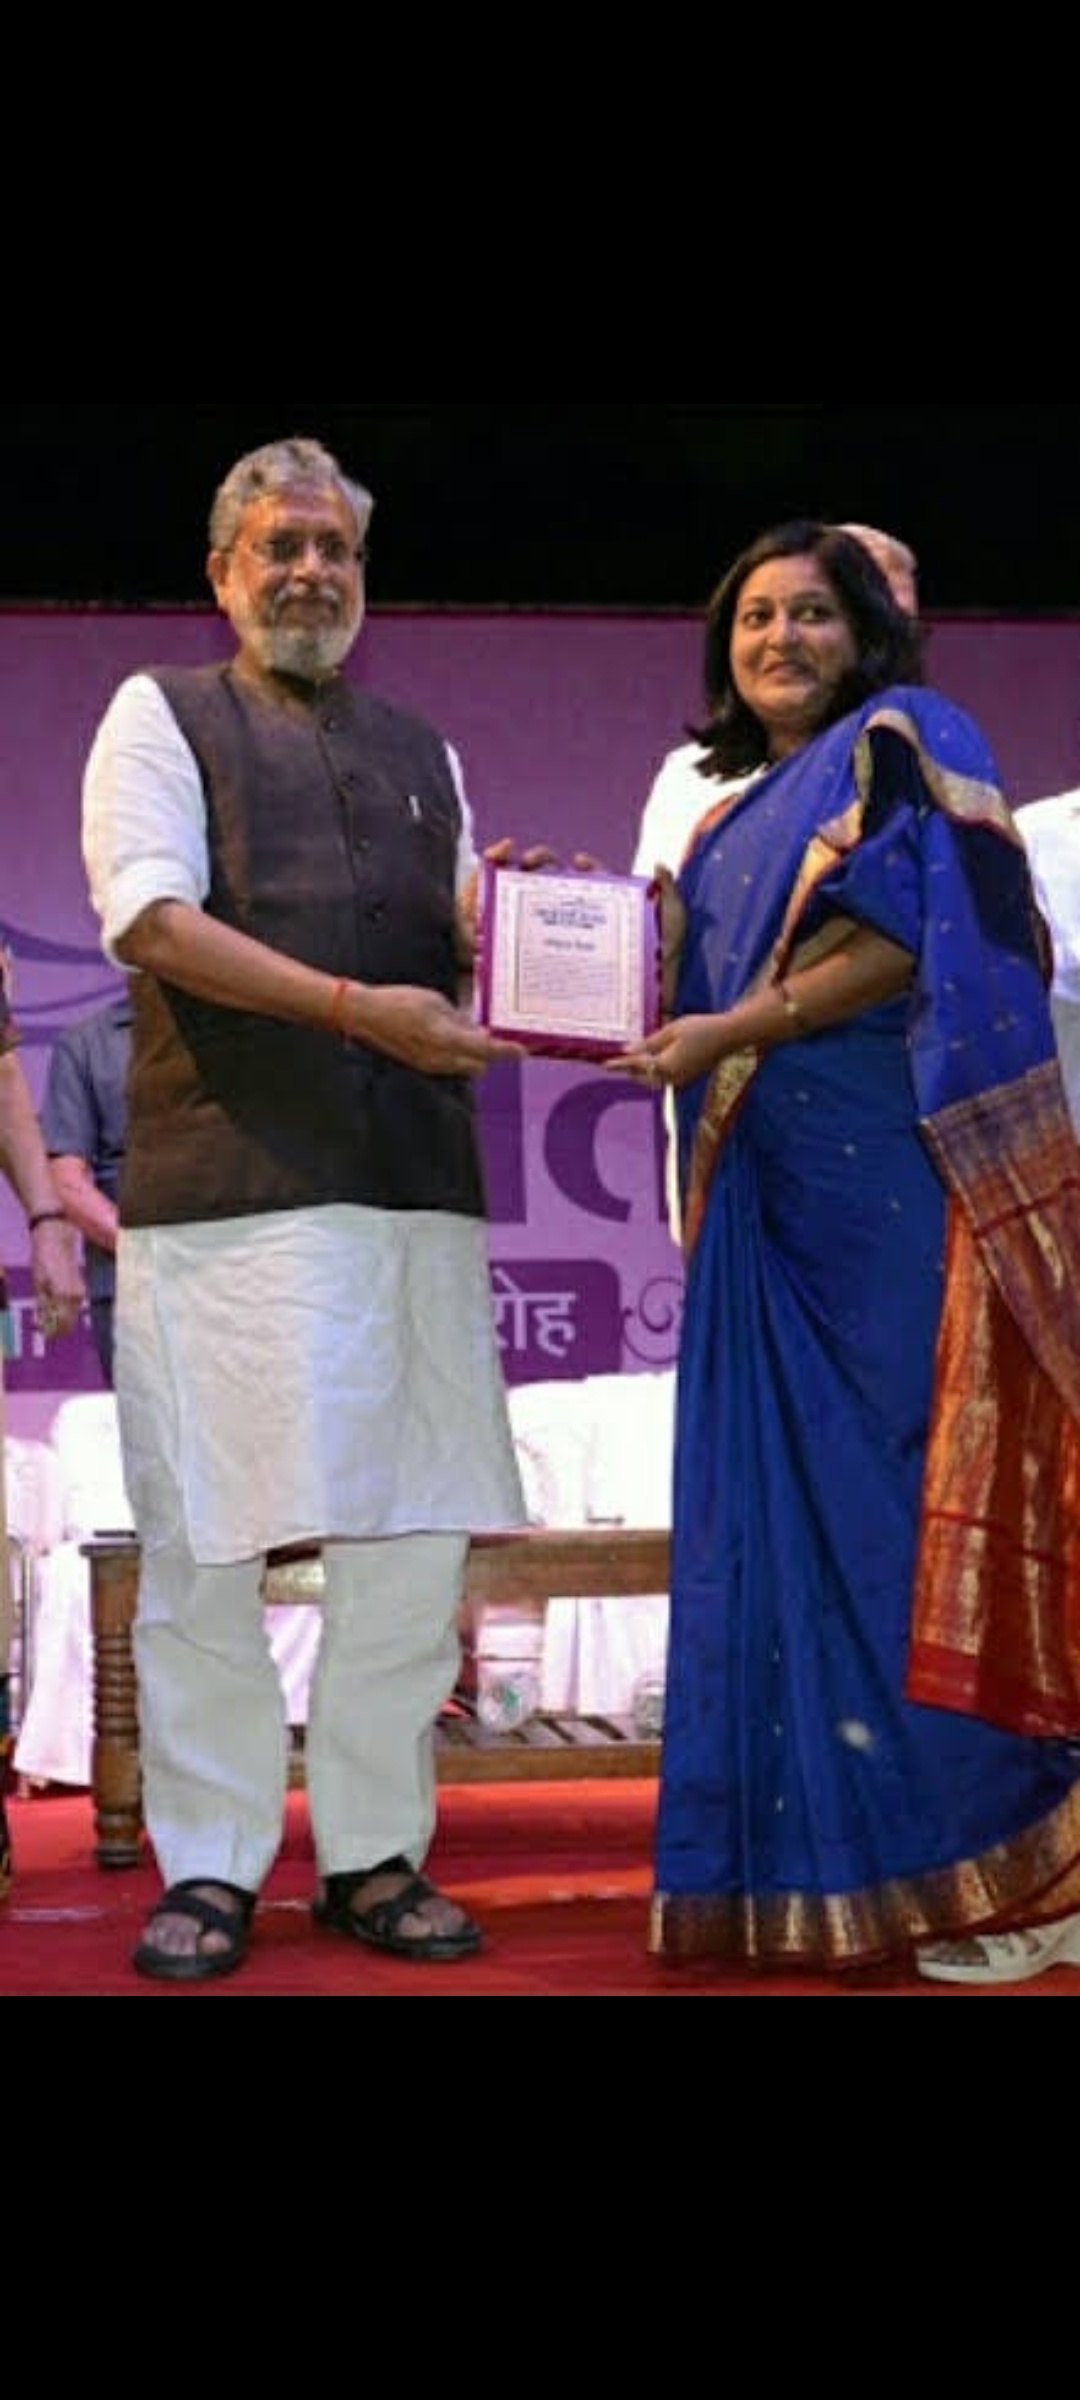 Amrita Singh Awarded by Deputy Chief Minister of Bihar, Sushil Modi for Mensturation Awarness Work in Bihar.jpg